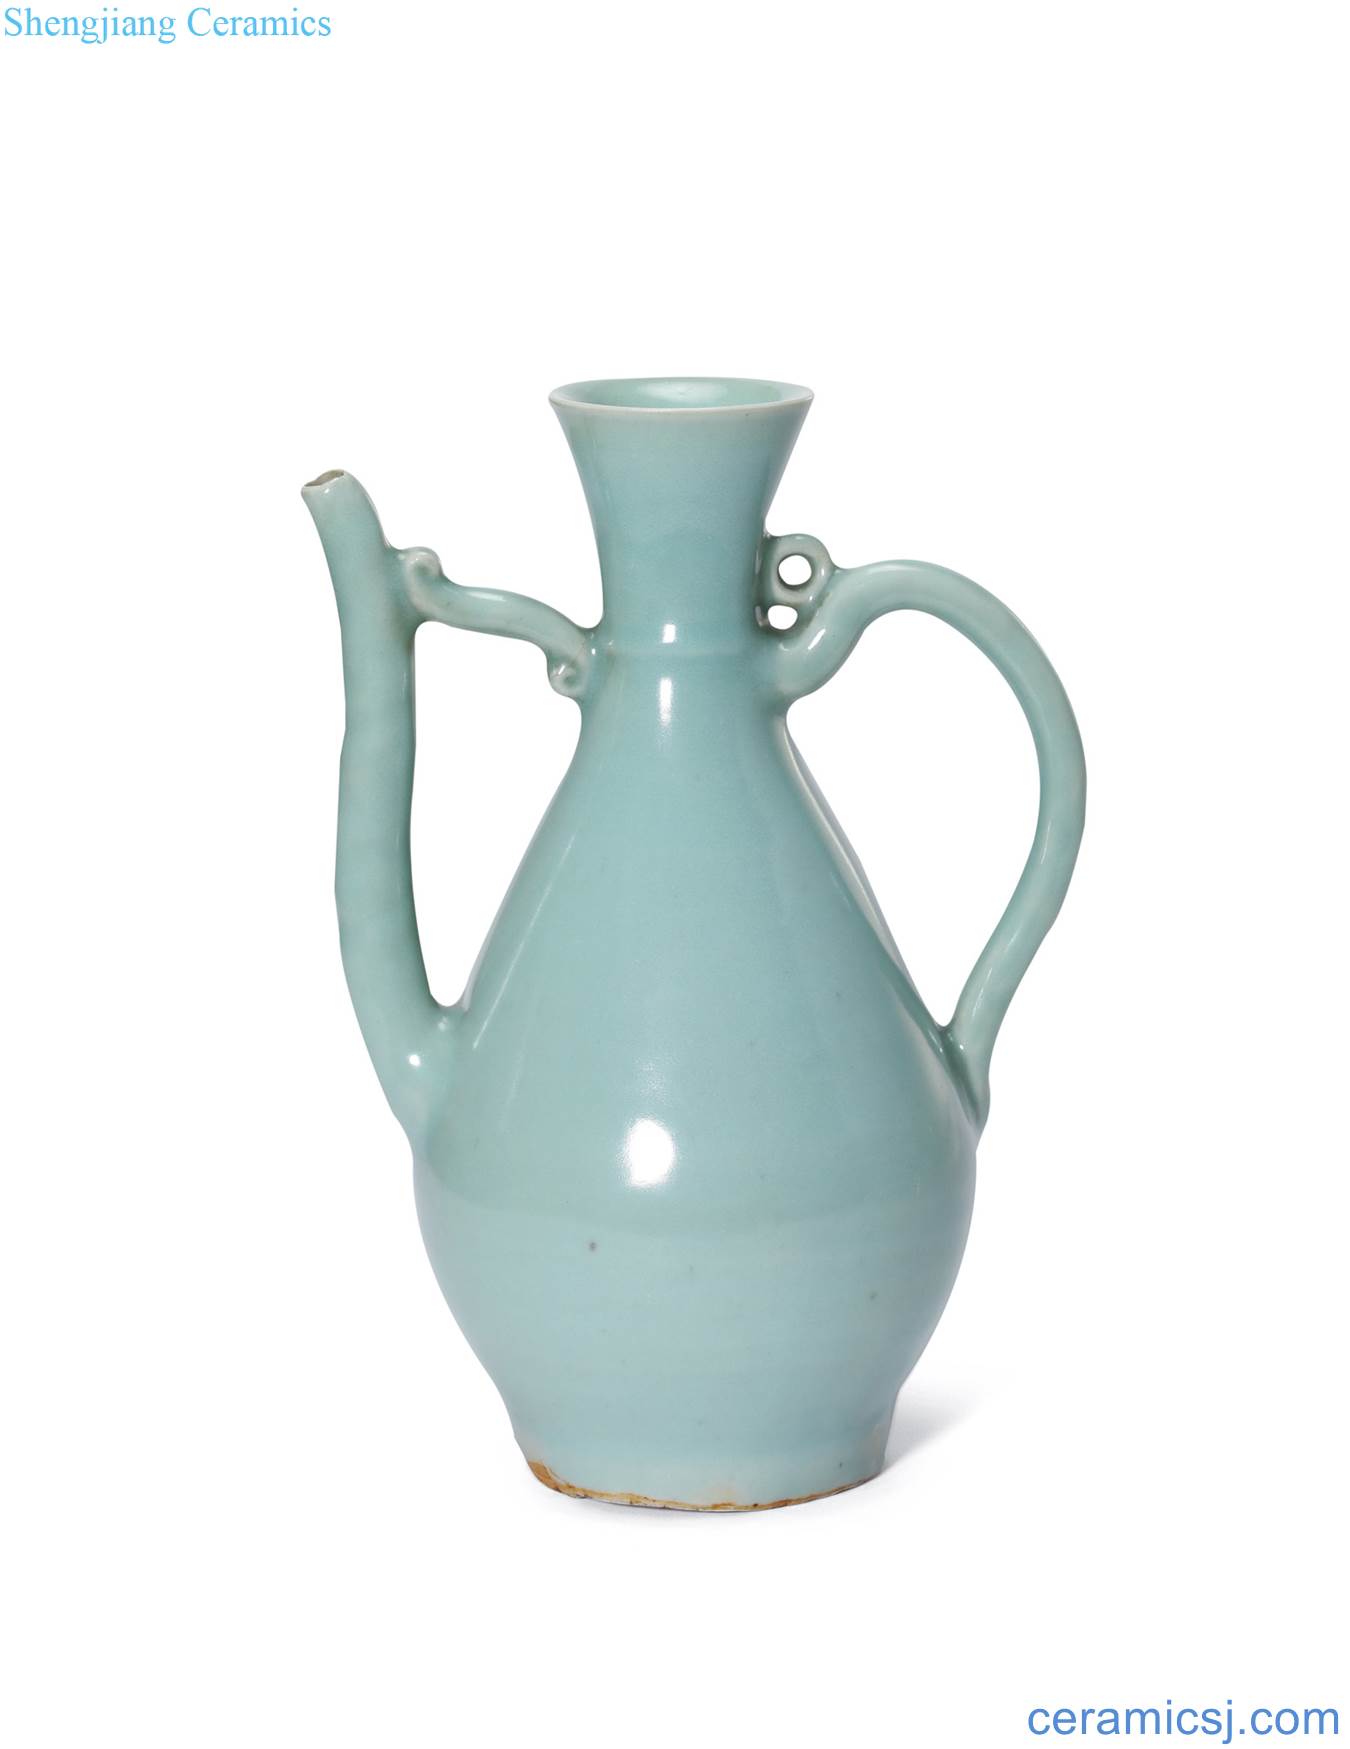 The southern song dynasty Longquan celadon powder blue glaze ewer